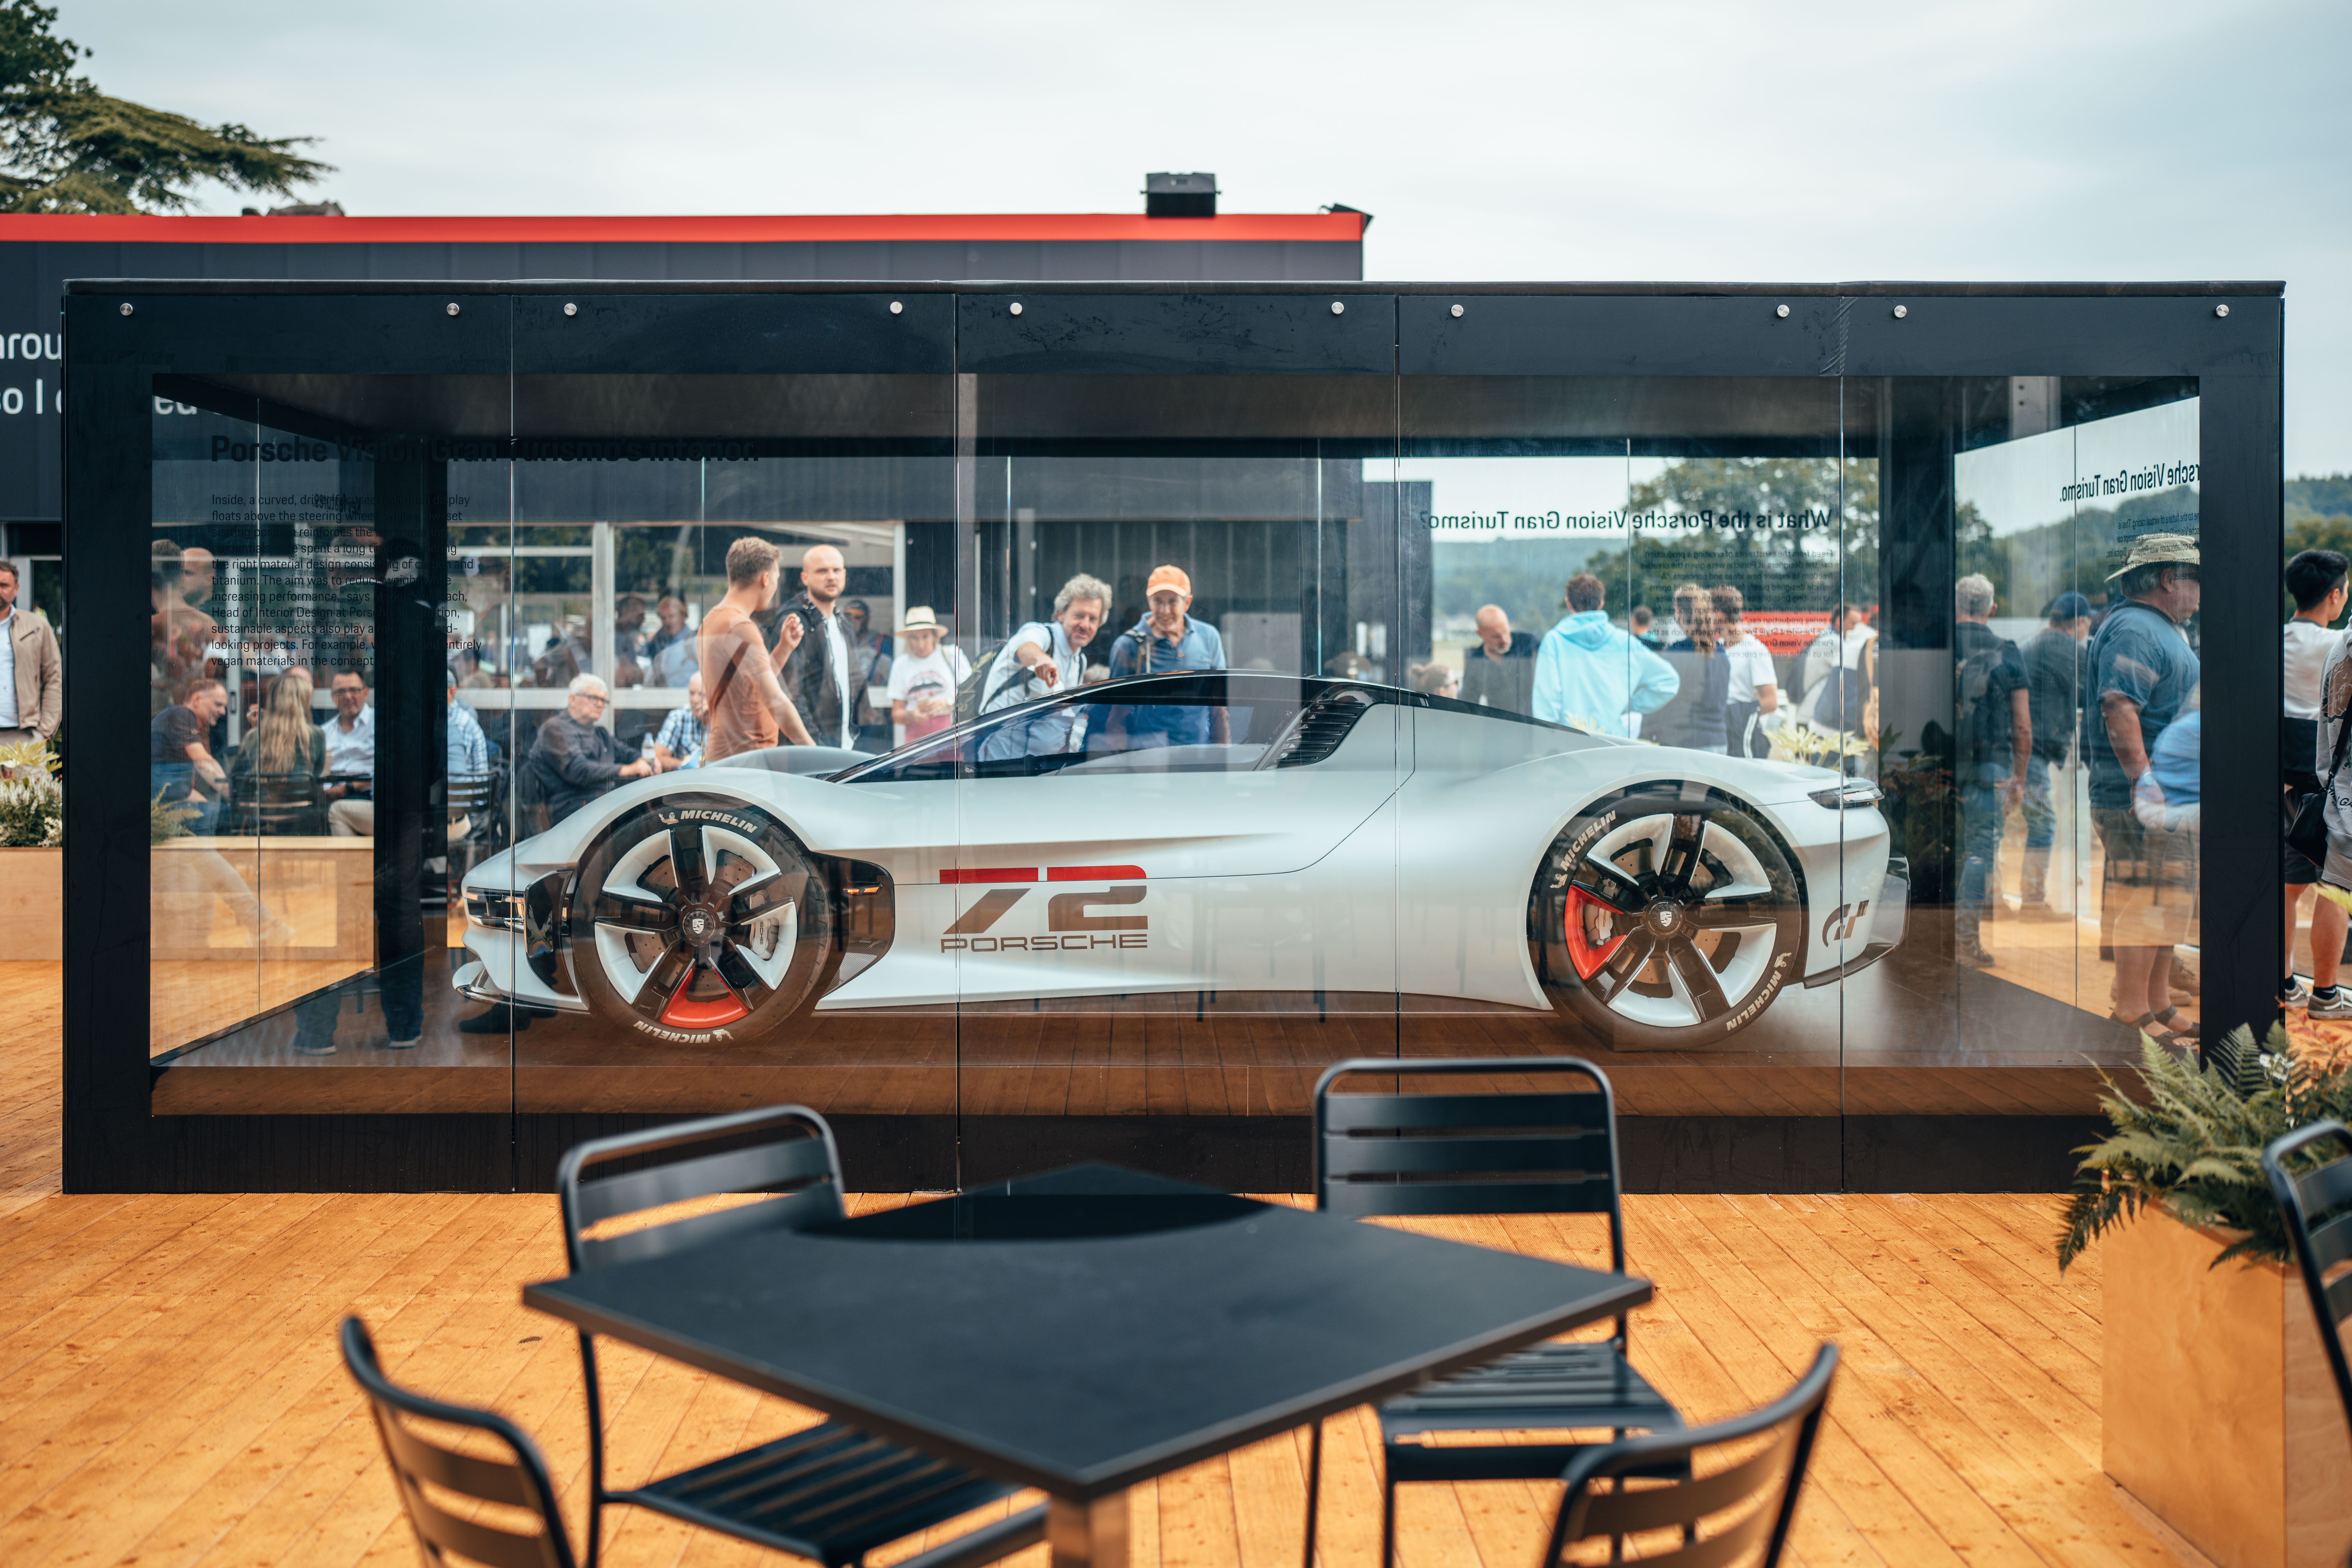 Porsche Vision Gran Turismo inside glass box at Goodwood Festival